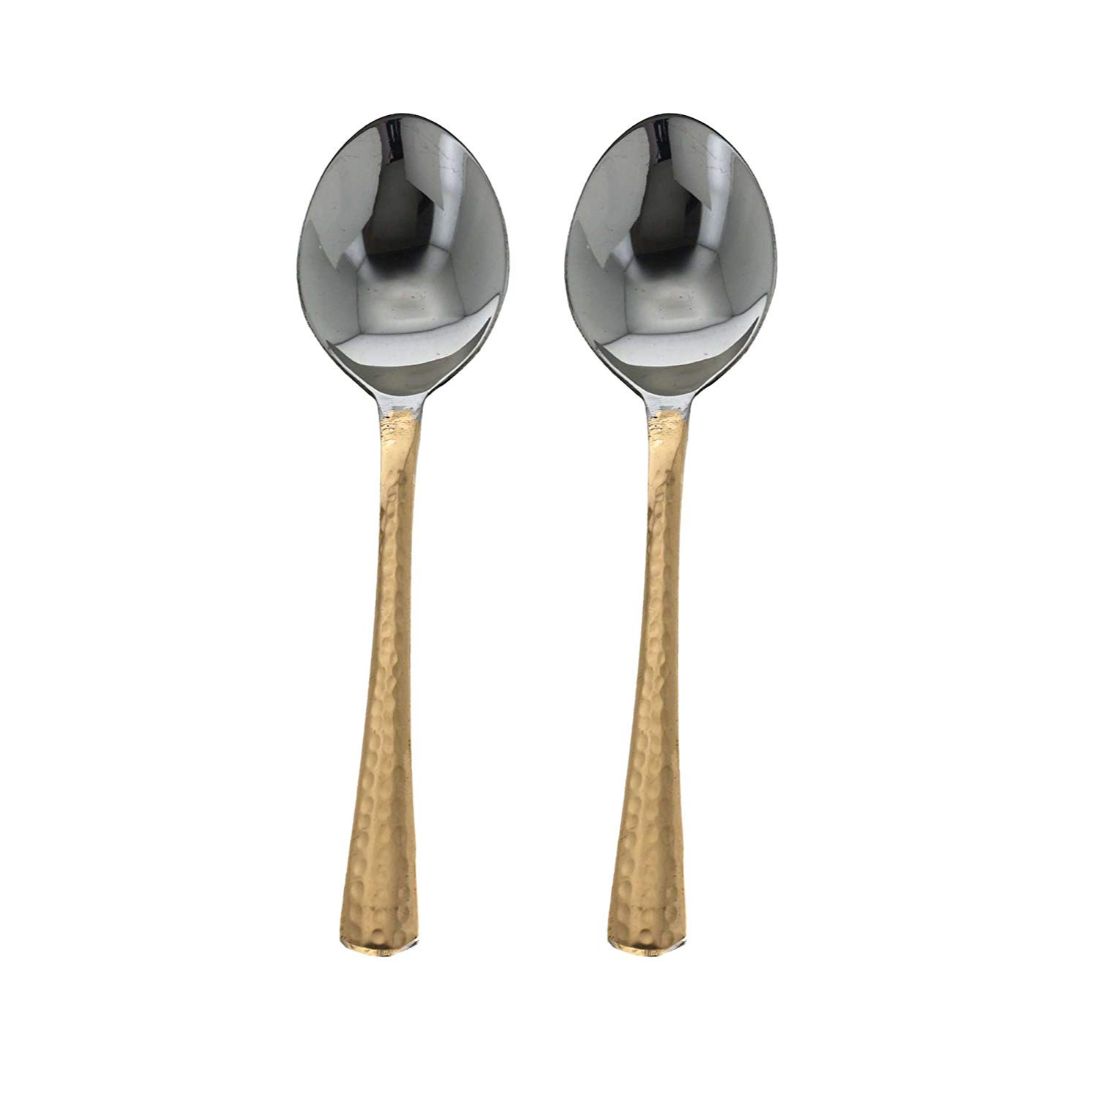 8" Inch Copper Serving Spoons Set of 2 Indian Dinnerware Serveware Restaurant Hotel Gift Item